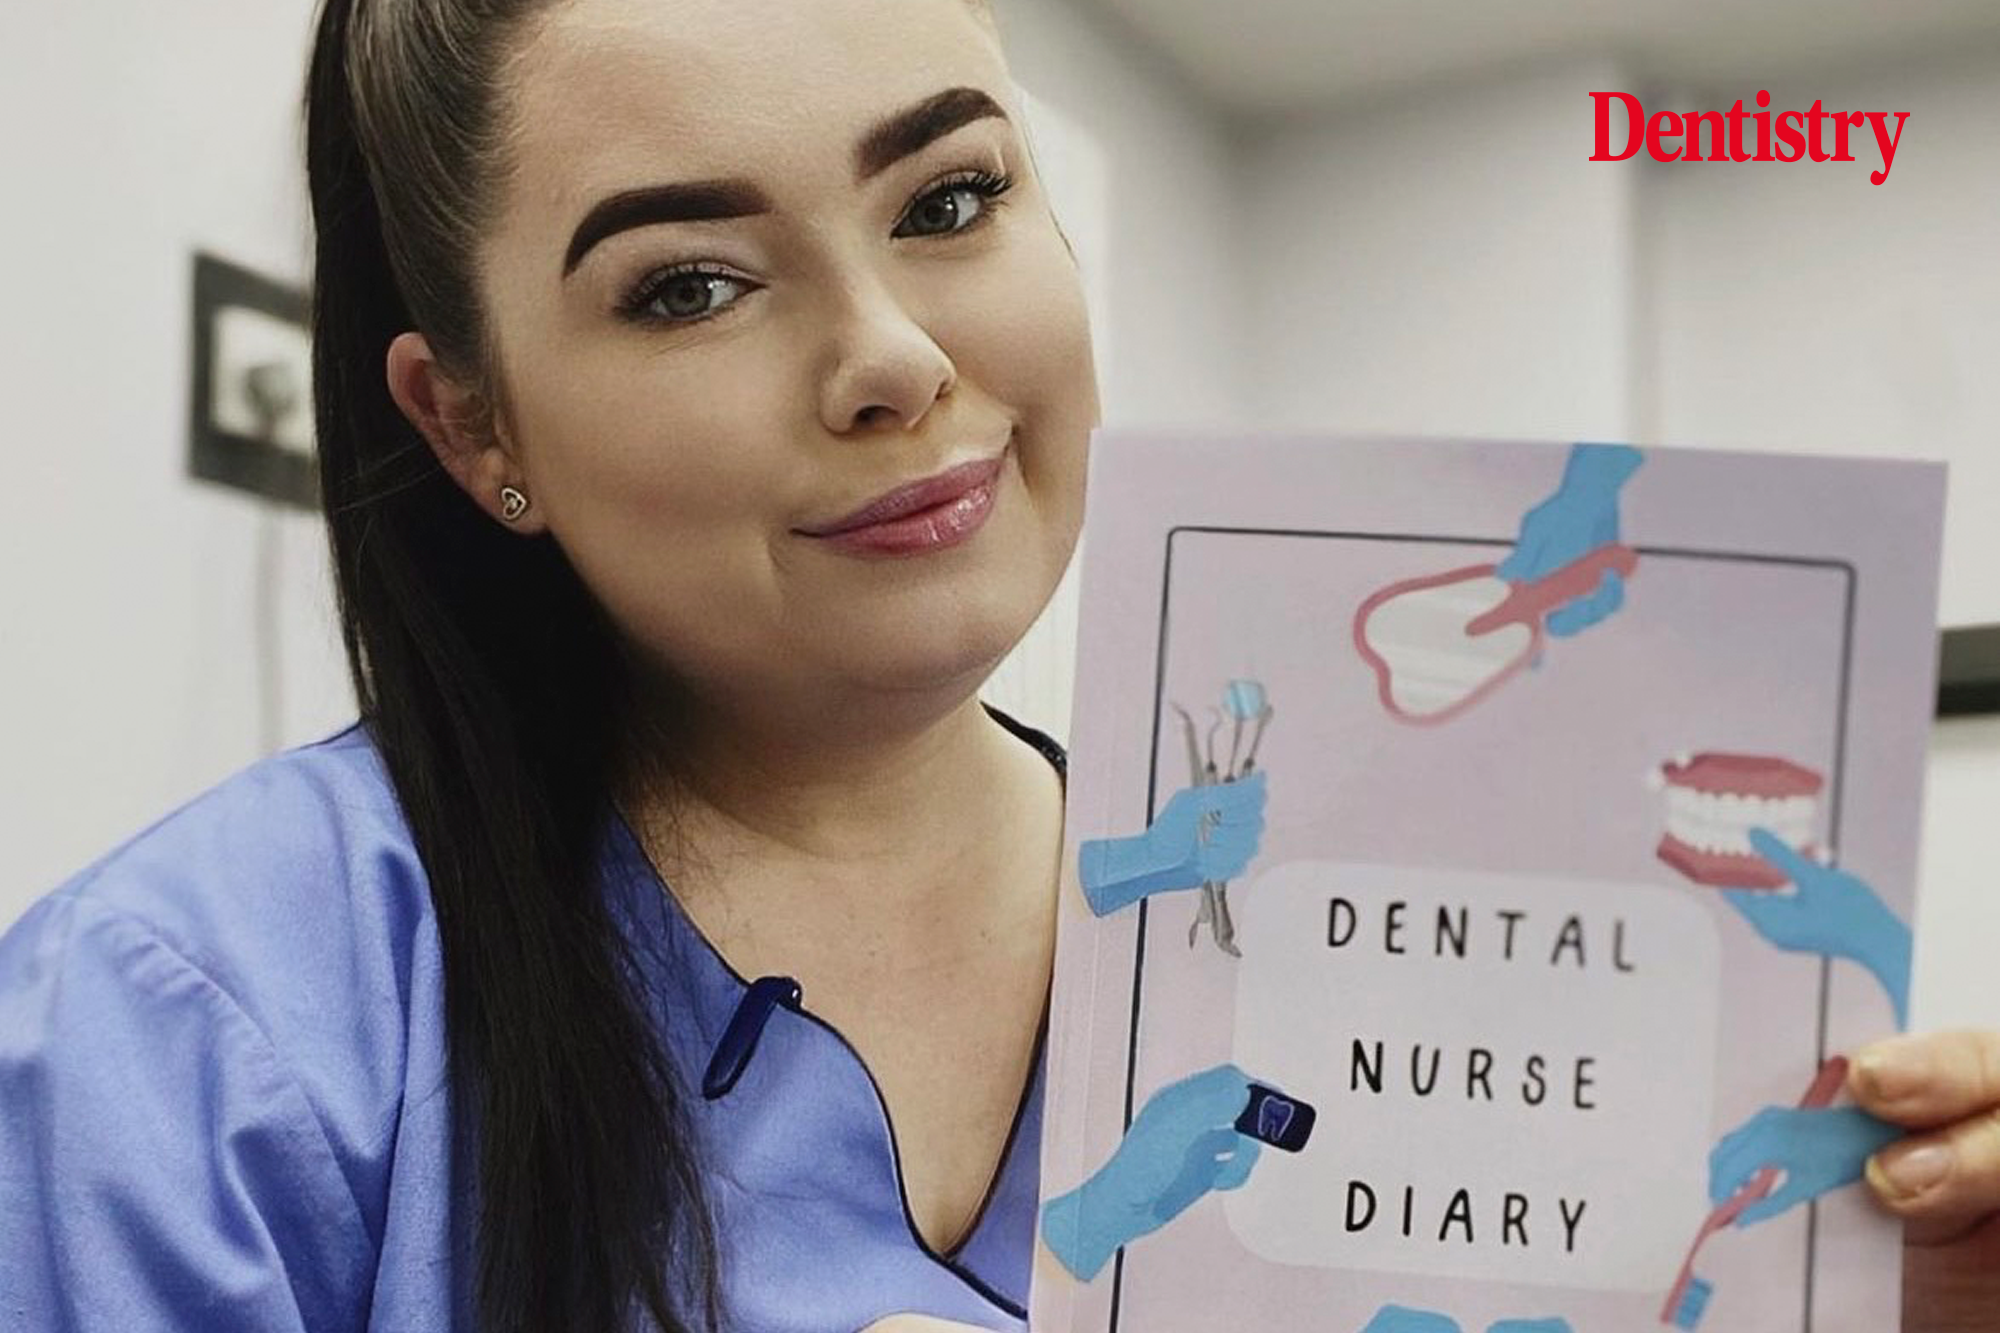 Gemma and her dental nurse diary